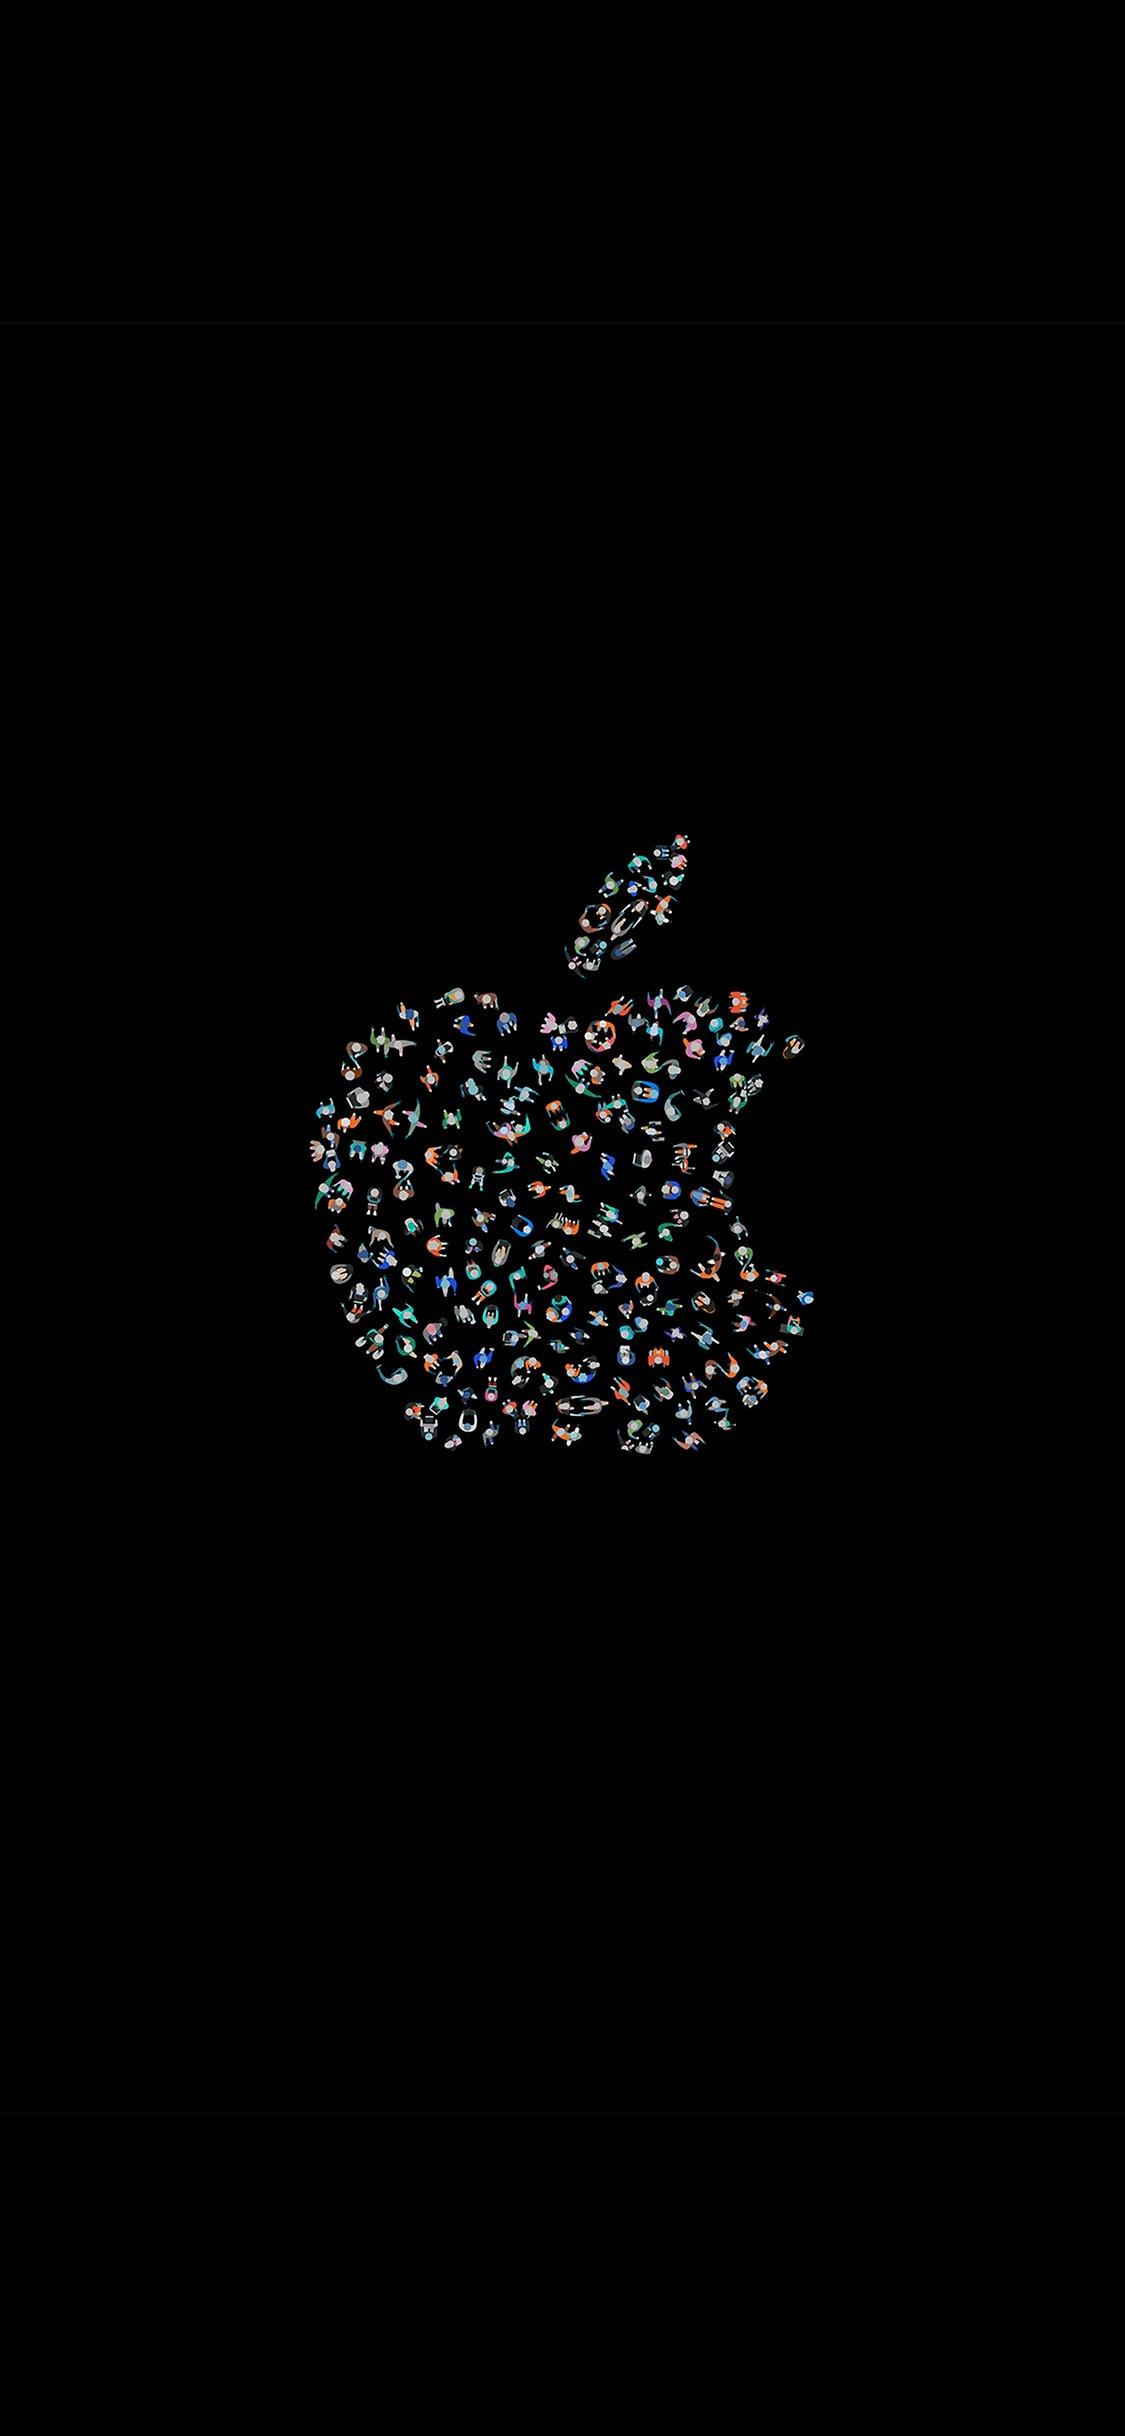 iPhone X wallpaper. wwdc apple logo dark black minimal illustration art